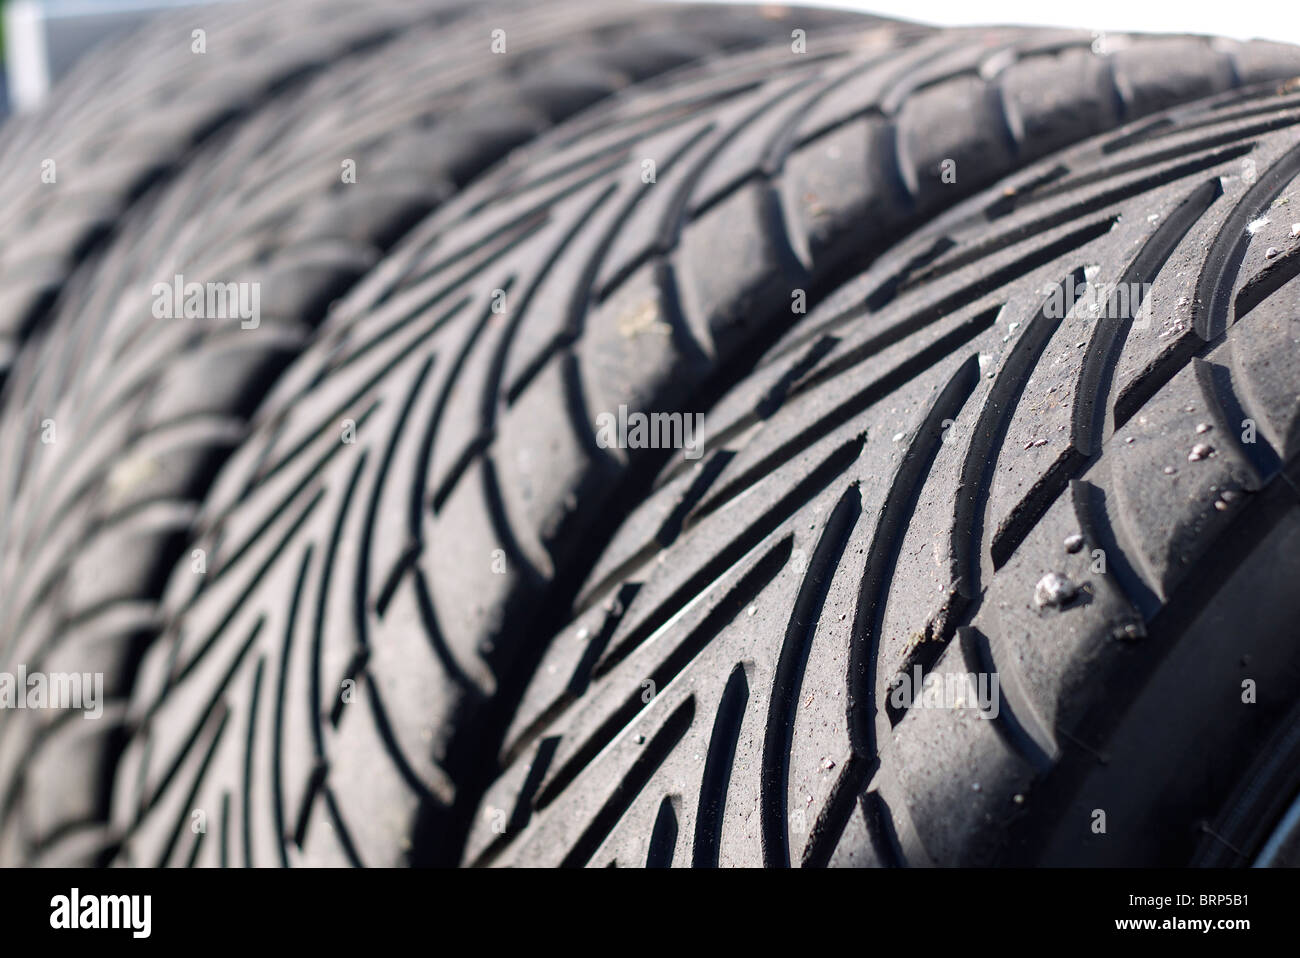 Racing Tyres in a rack Stock Photo